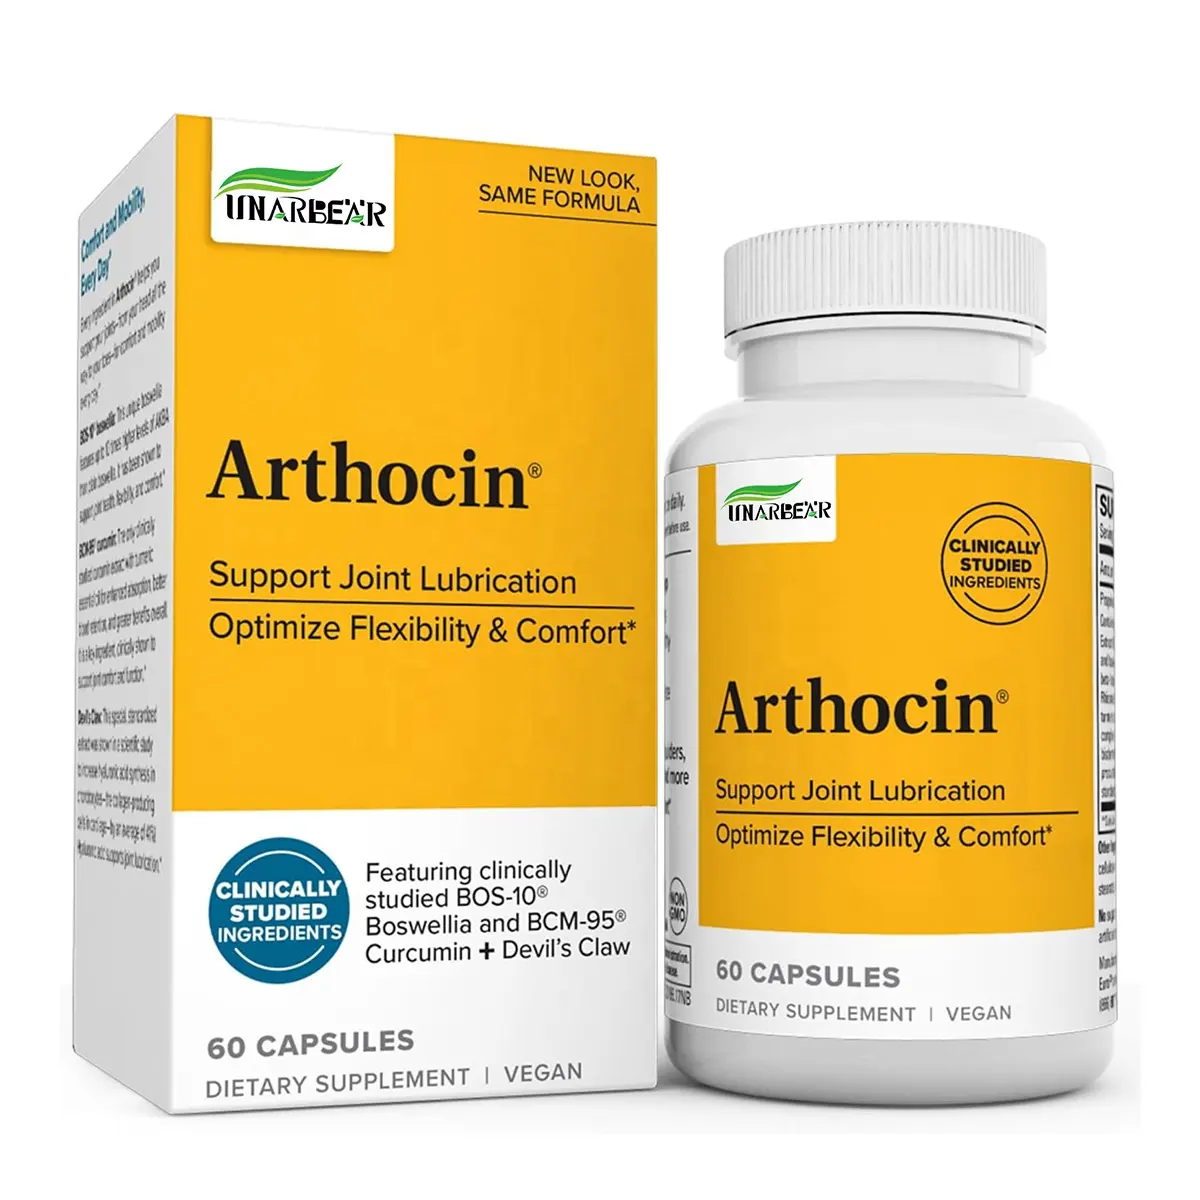 Private Label Support Joint Lubrication Optimize Flexibility Comfort Collagen Vegan Arthocin Curcumin Capsules